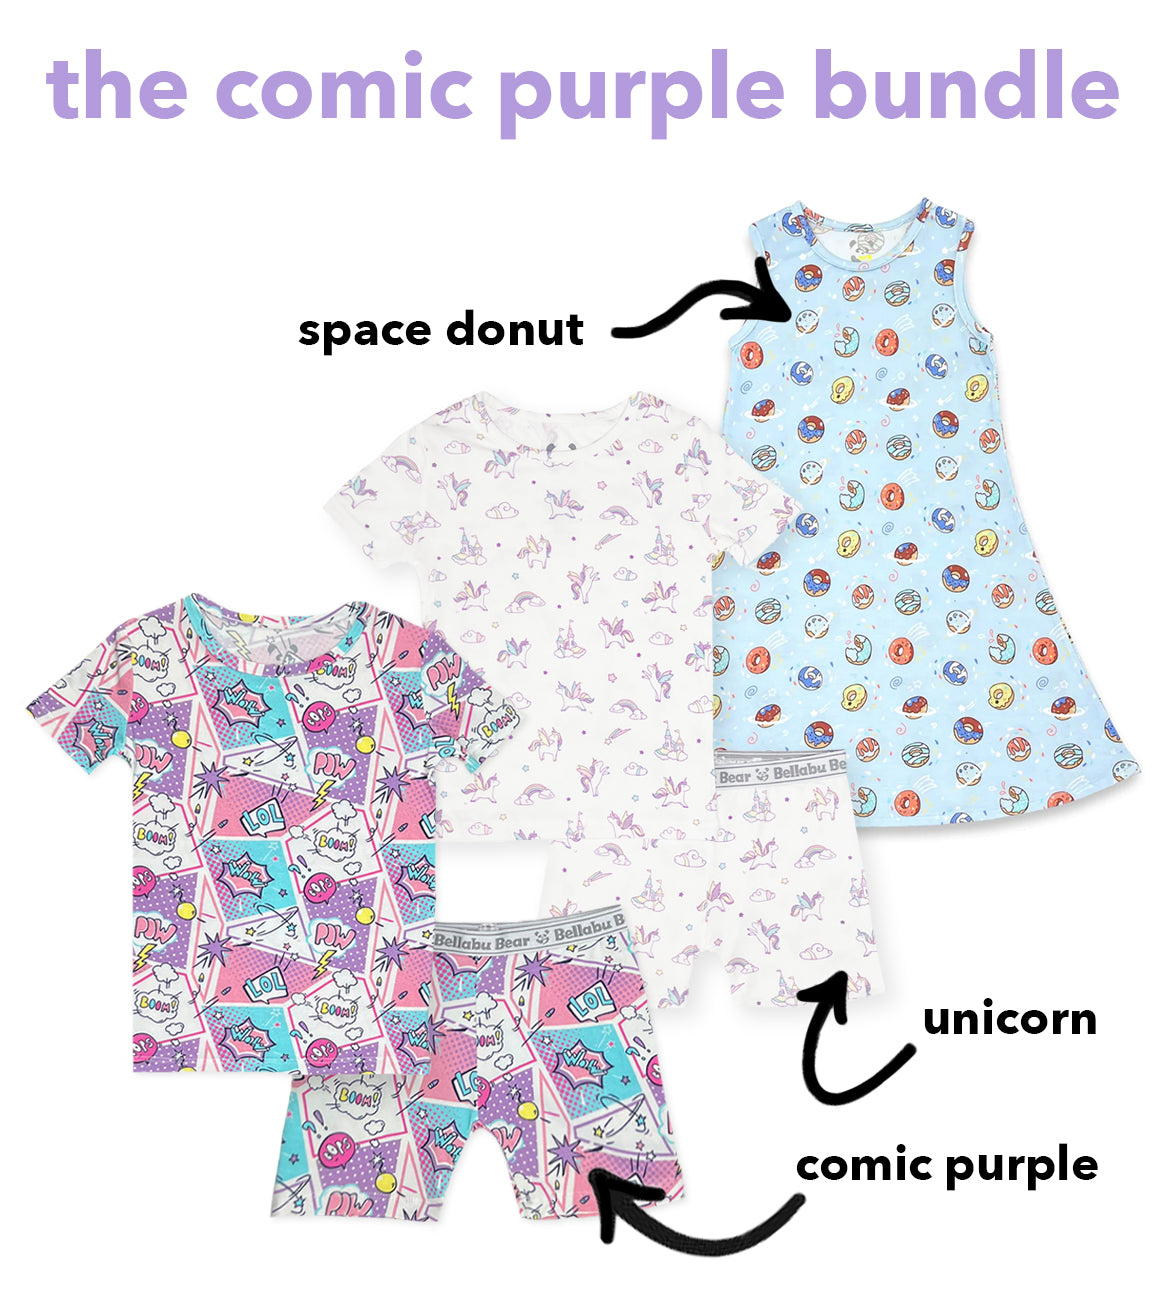 The Comic Purple Bundle